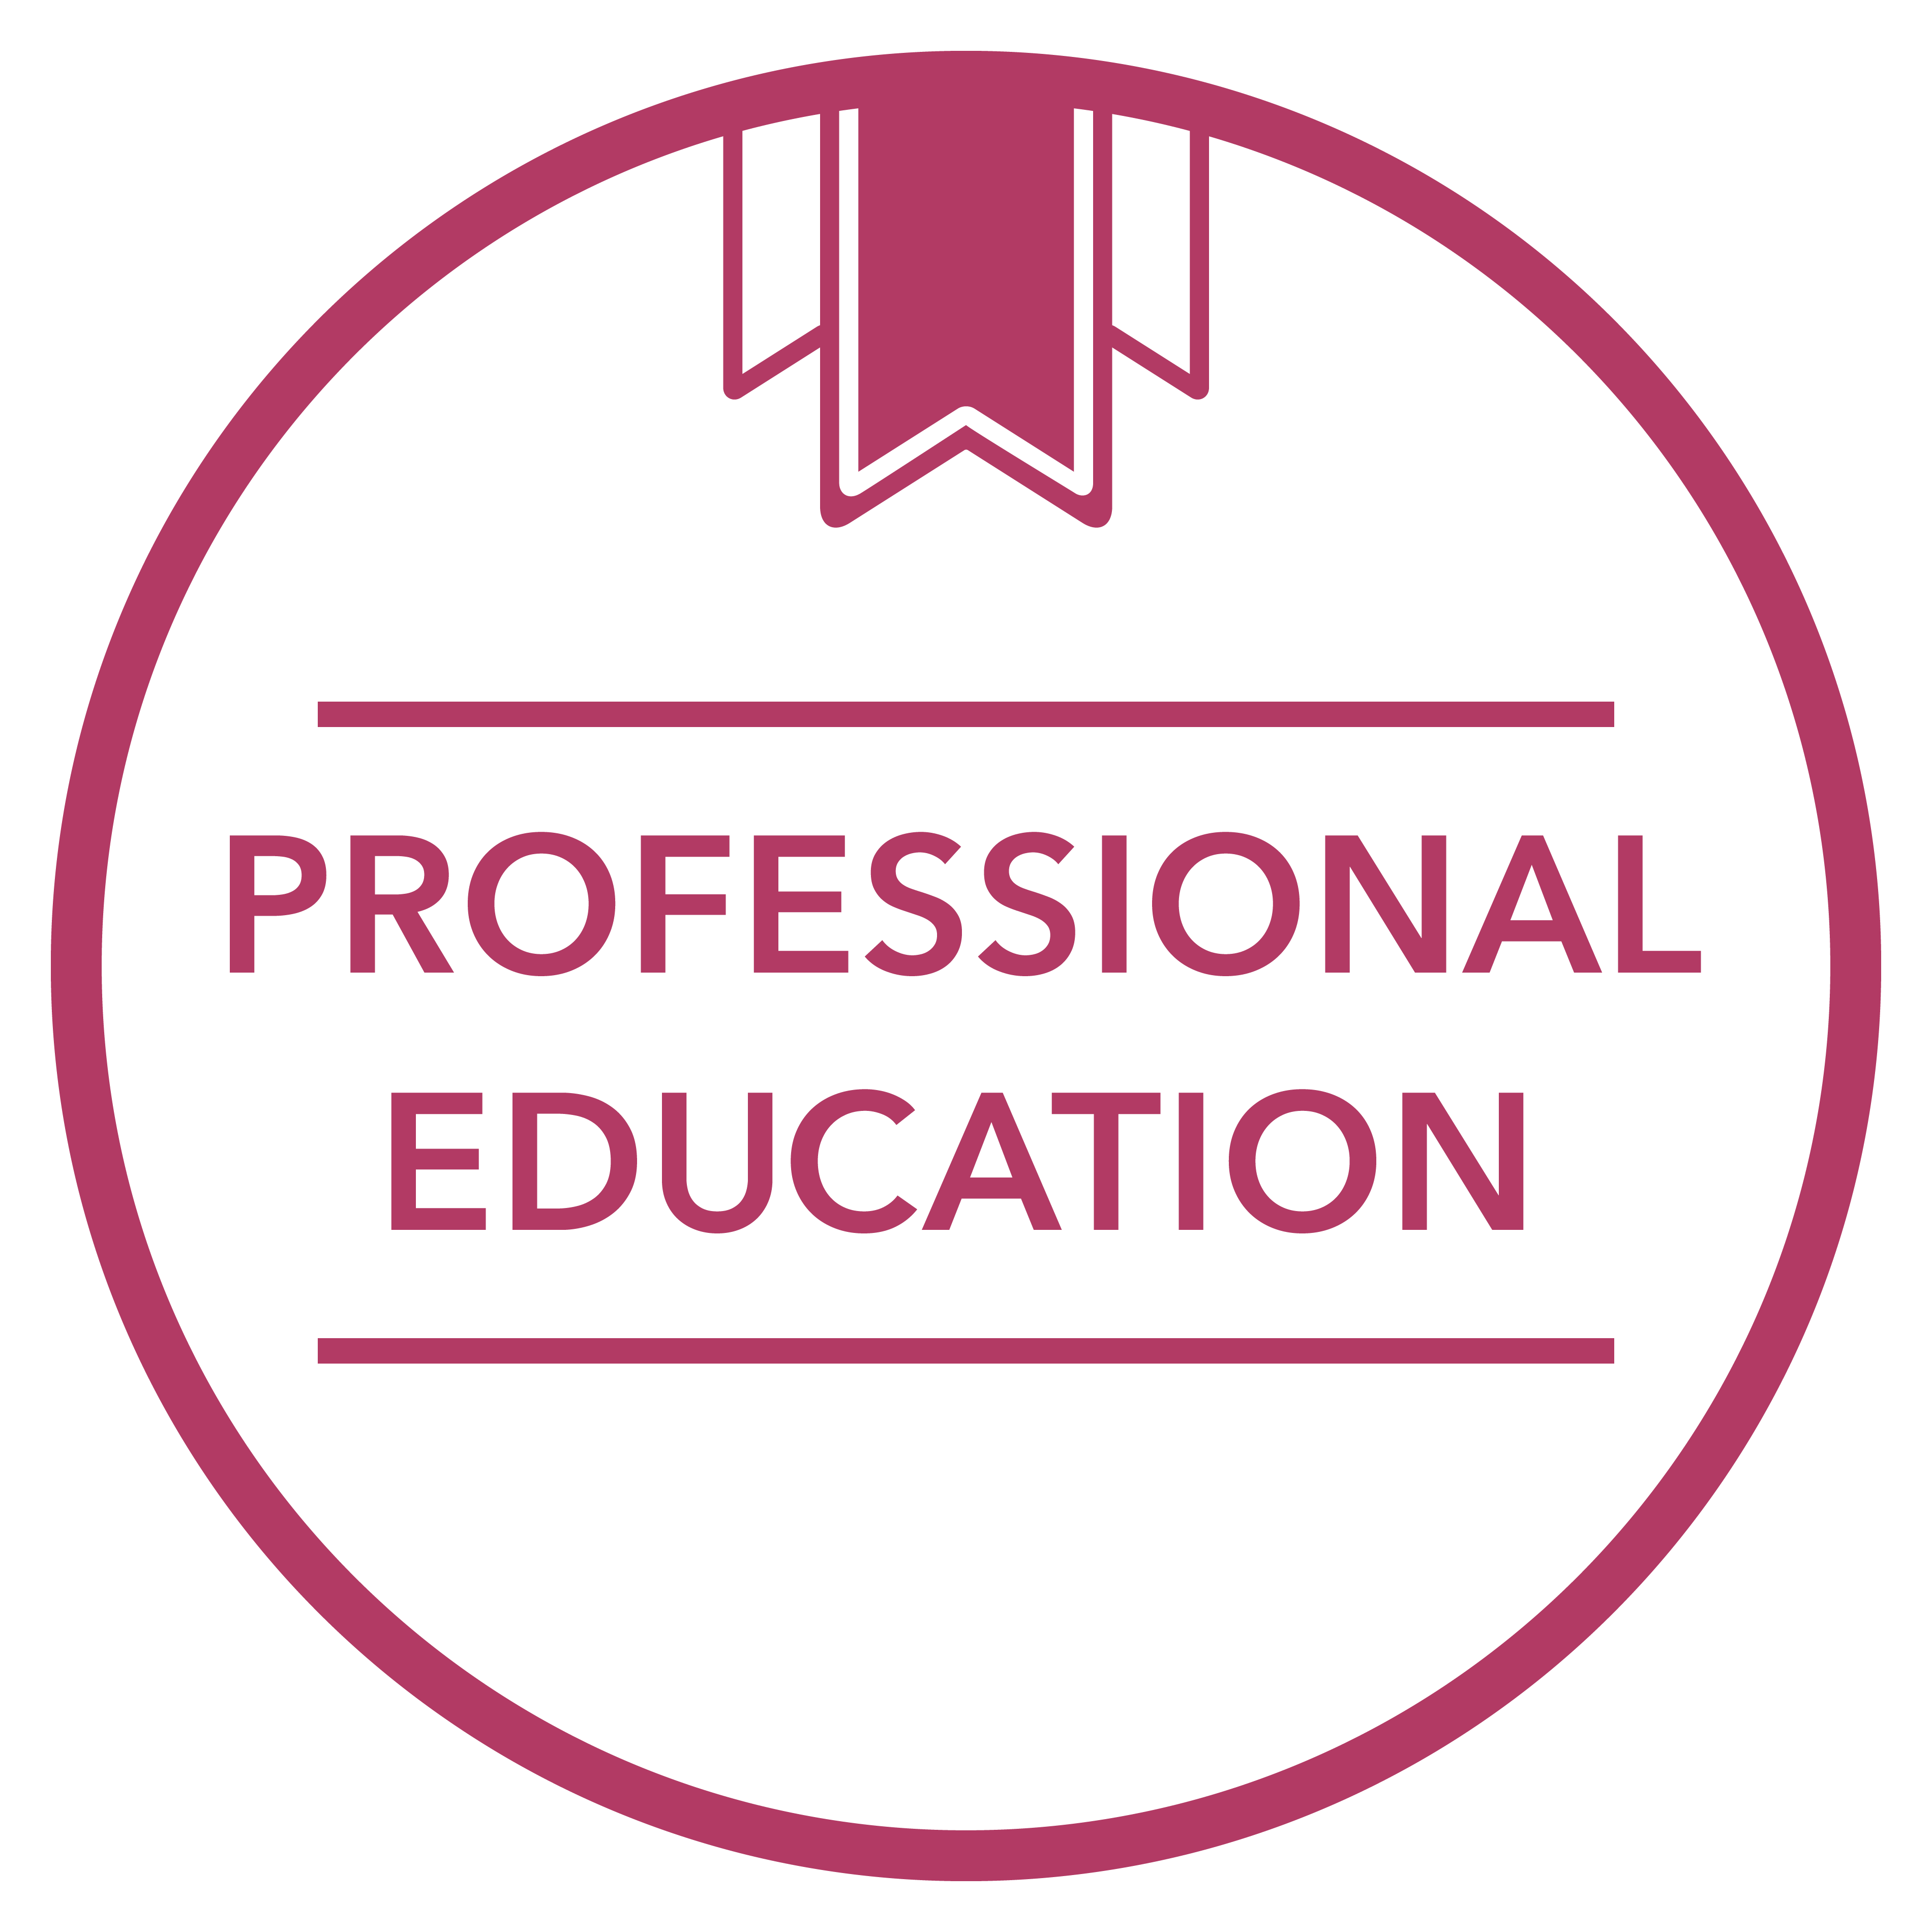 Professional Education Certificate Logo